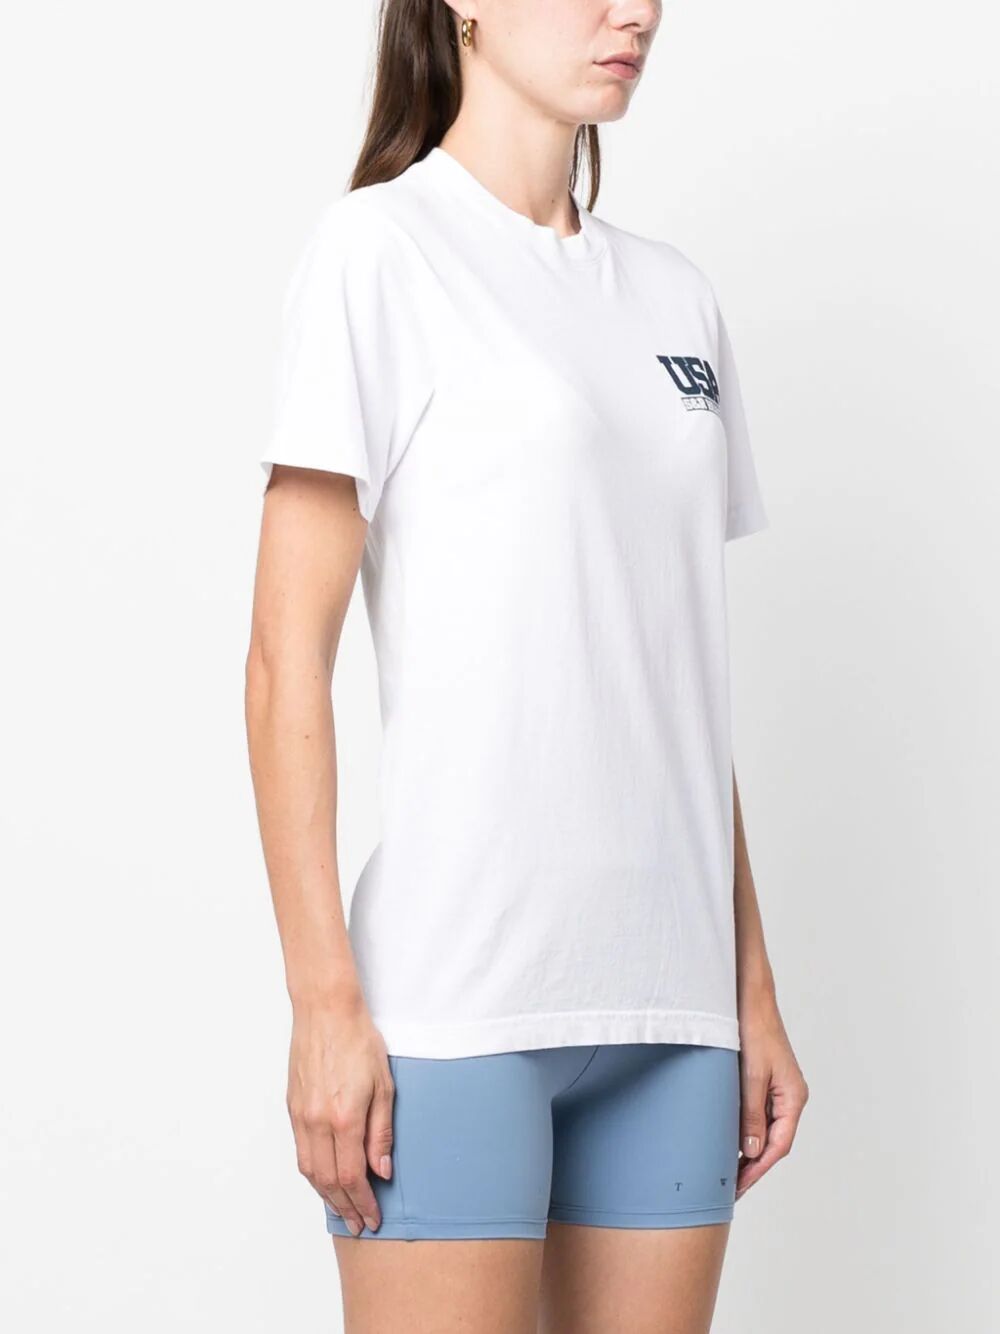 SPORTY & RICH-Team Usa T Shirt-TS883WH WHITE